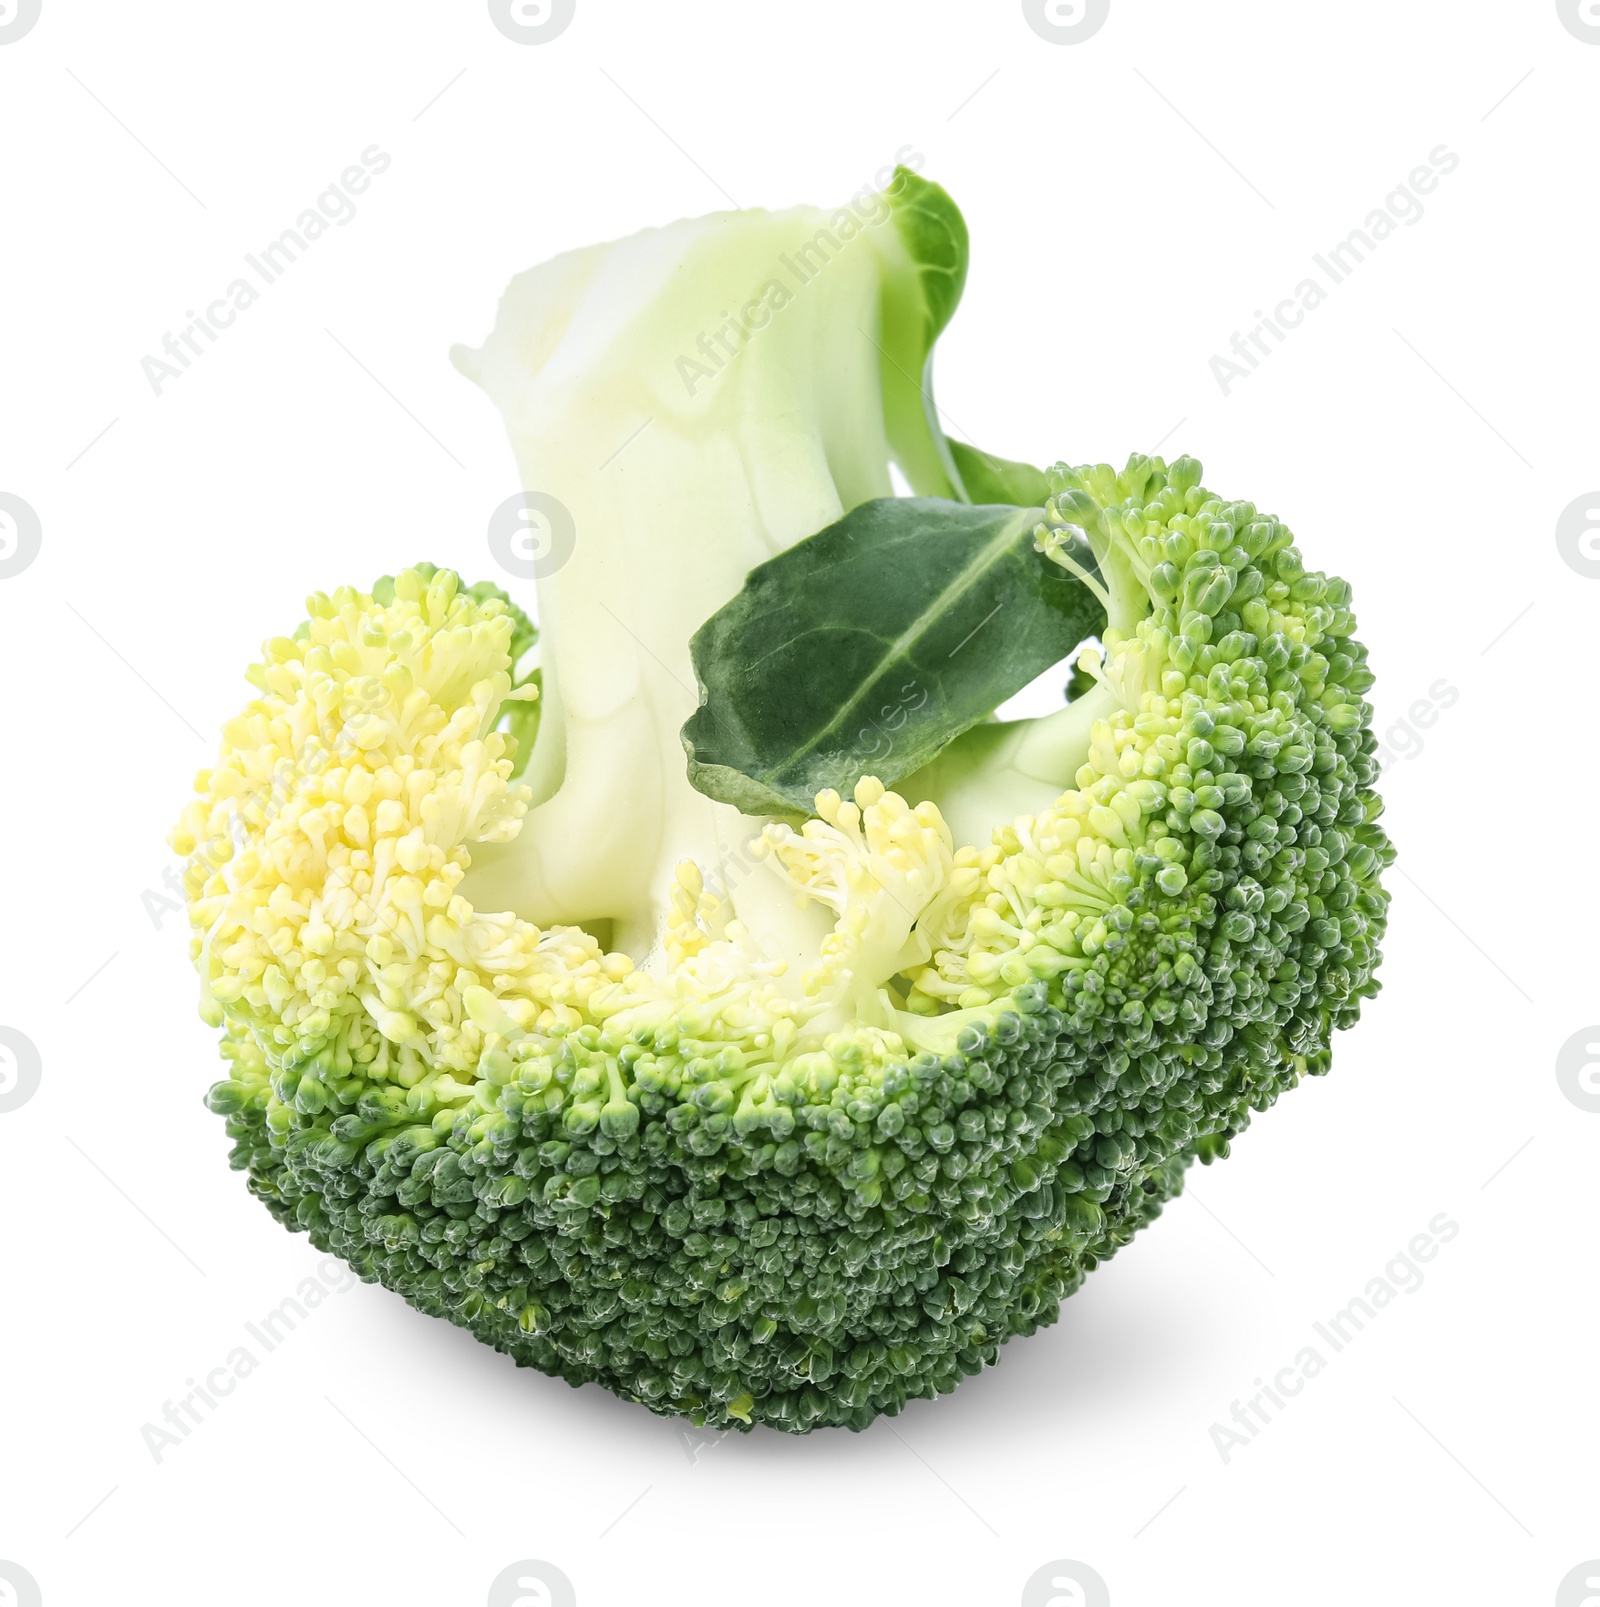 Photo of Cut green cauliflower on white background. Healthy food